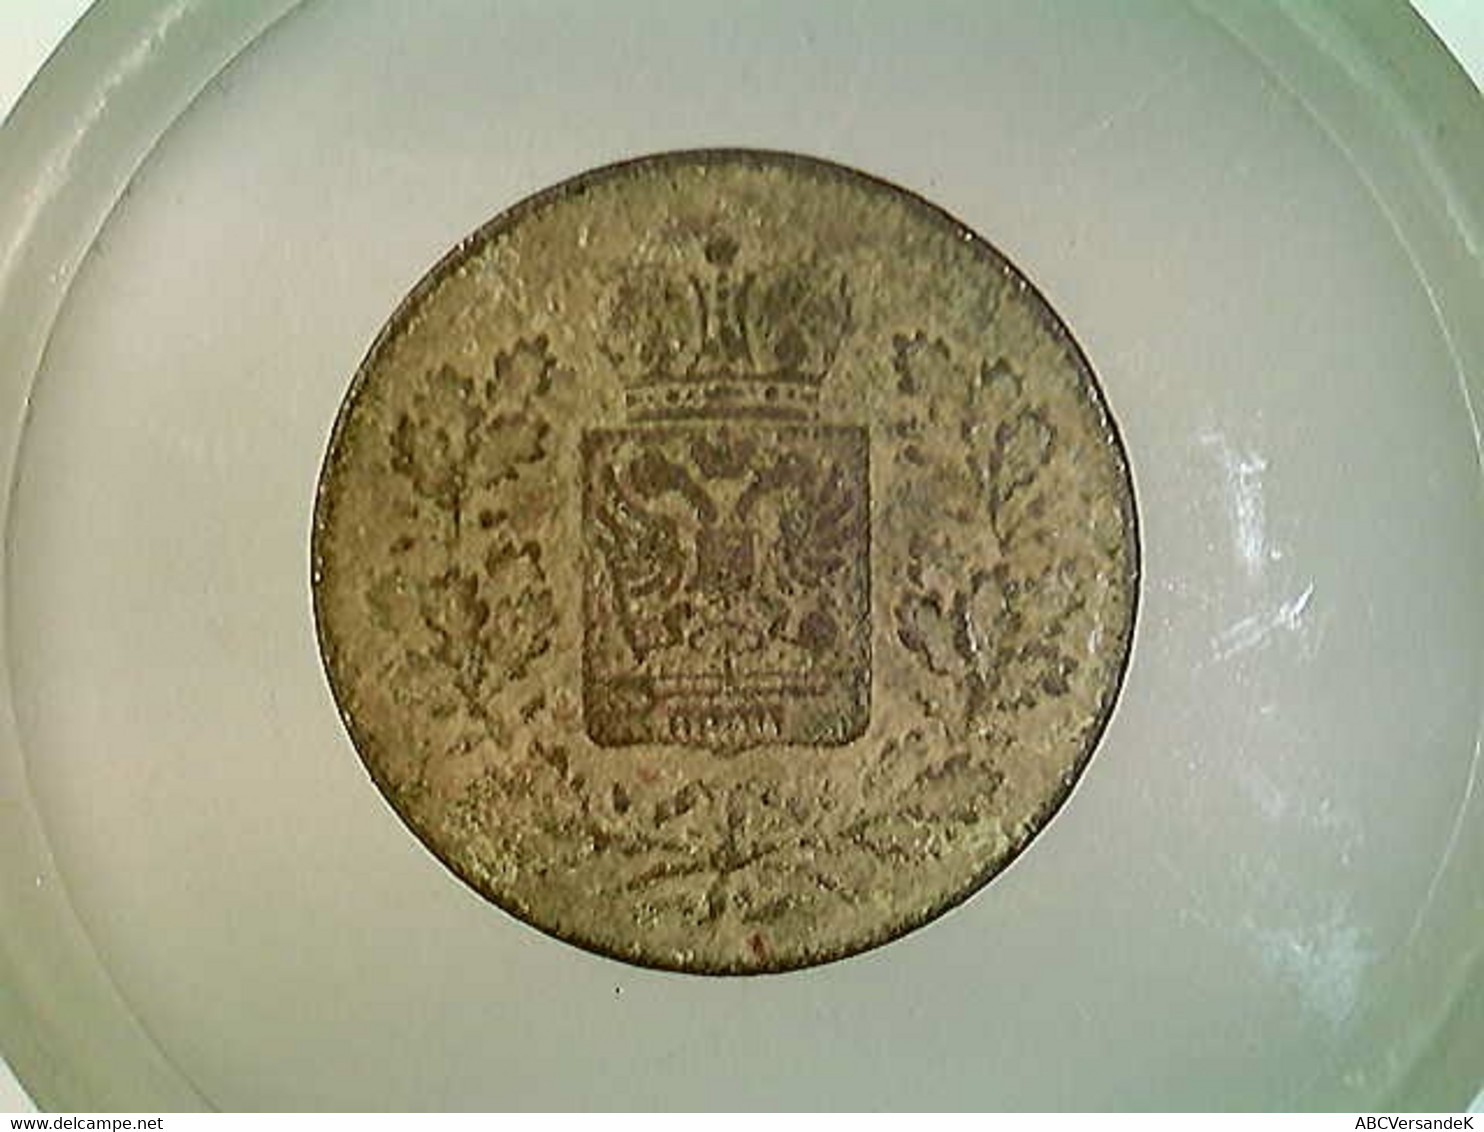 Münze, 1 Kreuzer, 1840, Schwarzburg Rudolstadt - Numismatik